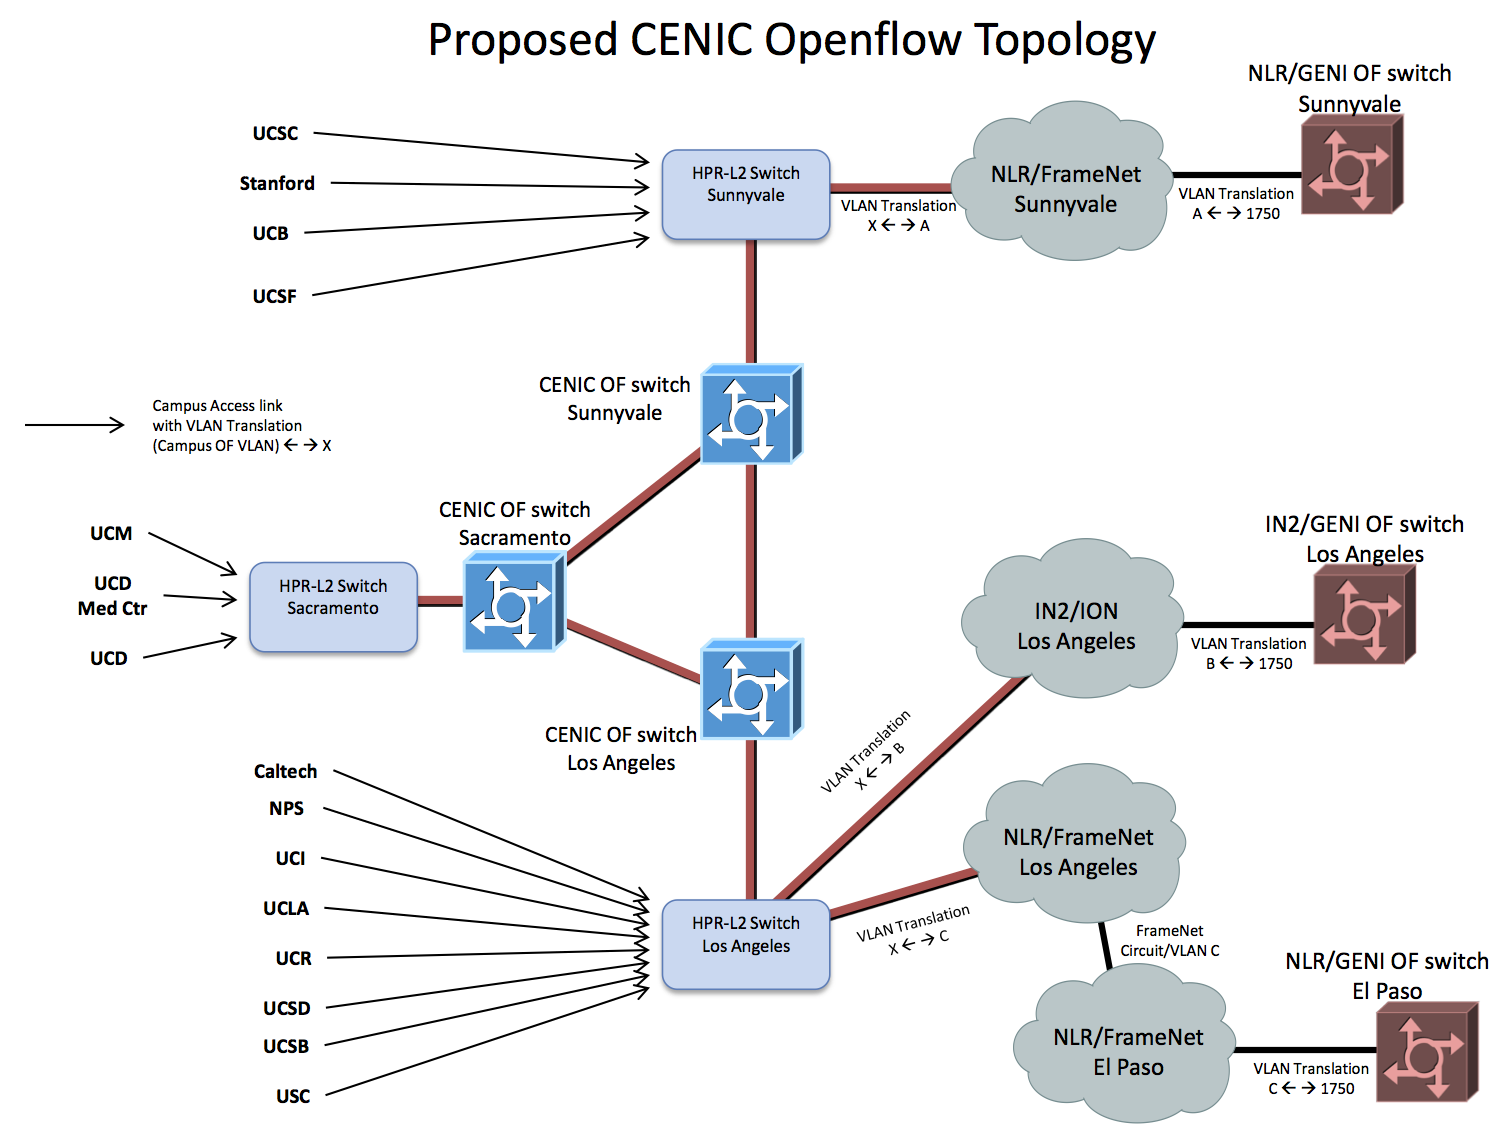 .png version of original CENIC network diagram